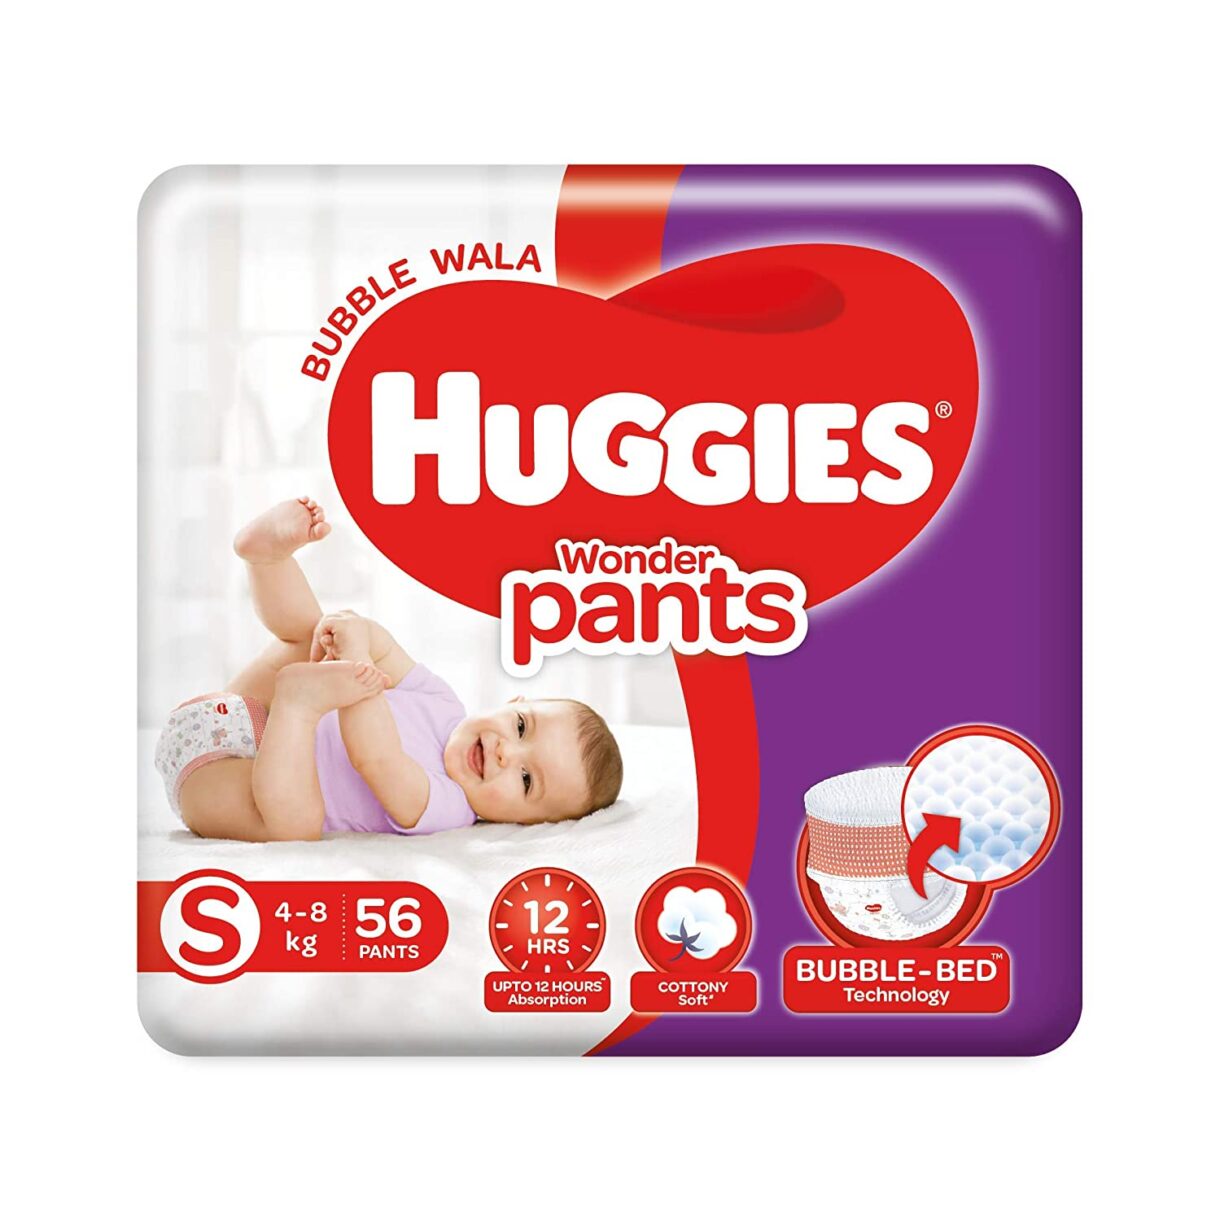 Huggies Wonder Pants, Small (S) Size Baby Diaper Pants, 4 - 8 kg, 56 count